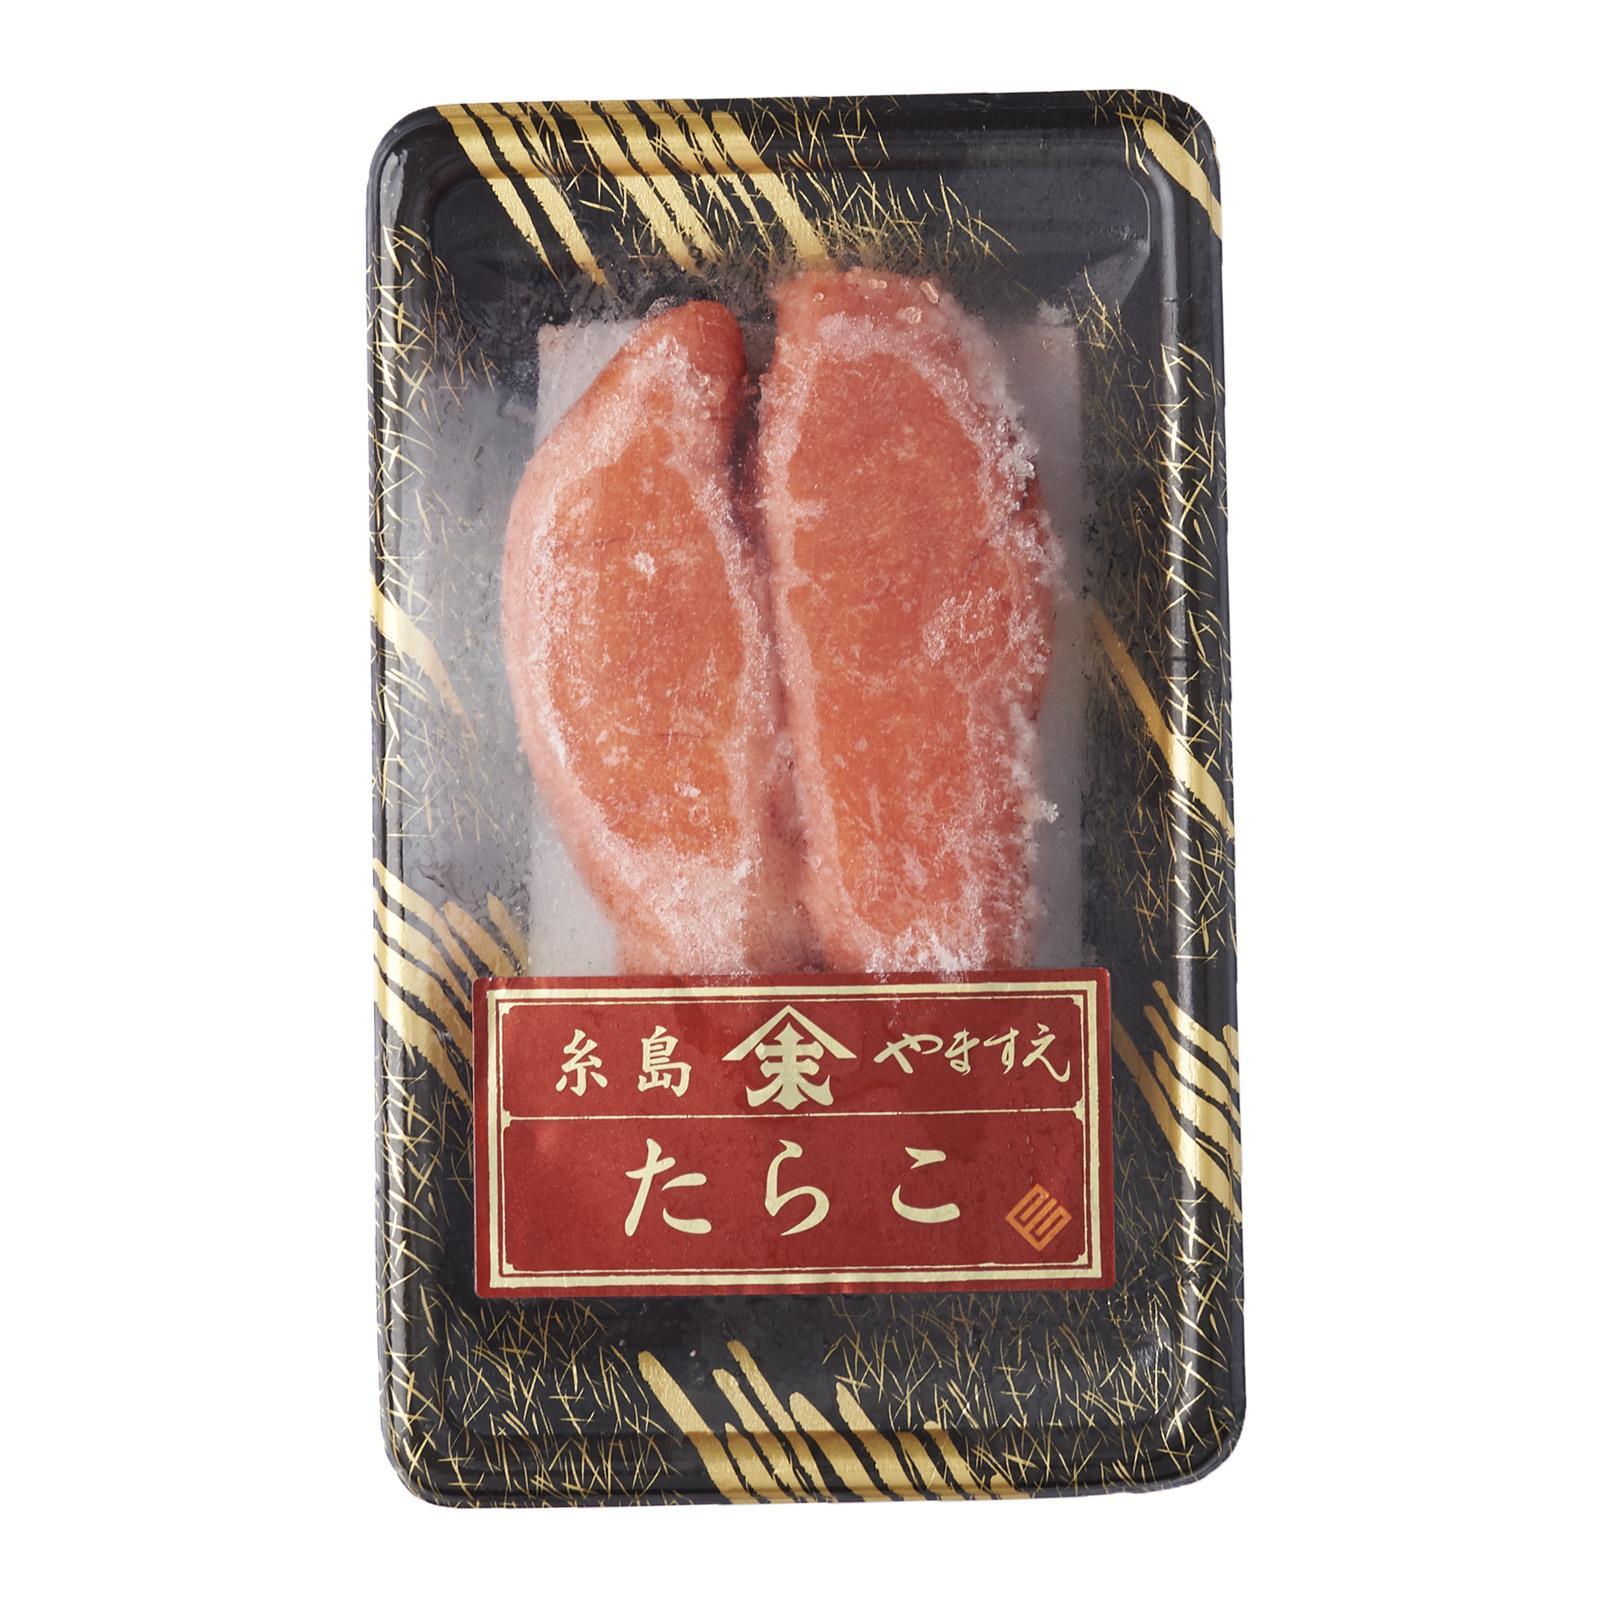 Kirei Japan S Specials Tarako Seasoned Cod Fish Roe In Egg Shac Frozen Lazada Singapore